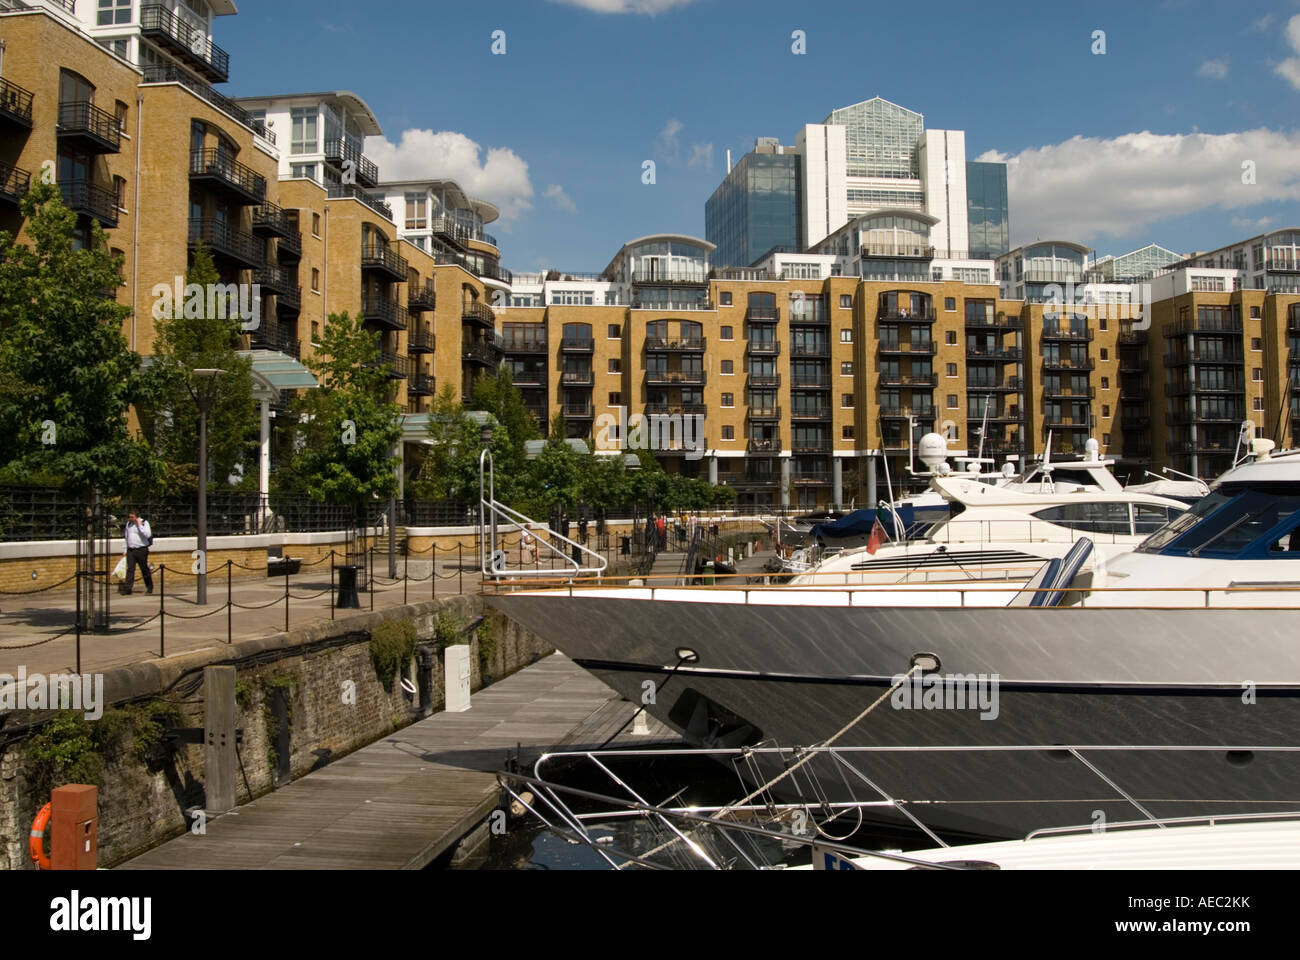 Yachts and apartments at St Katherine's Dock, London England UK Stock Photo